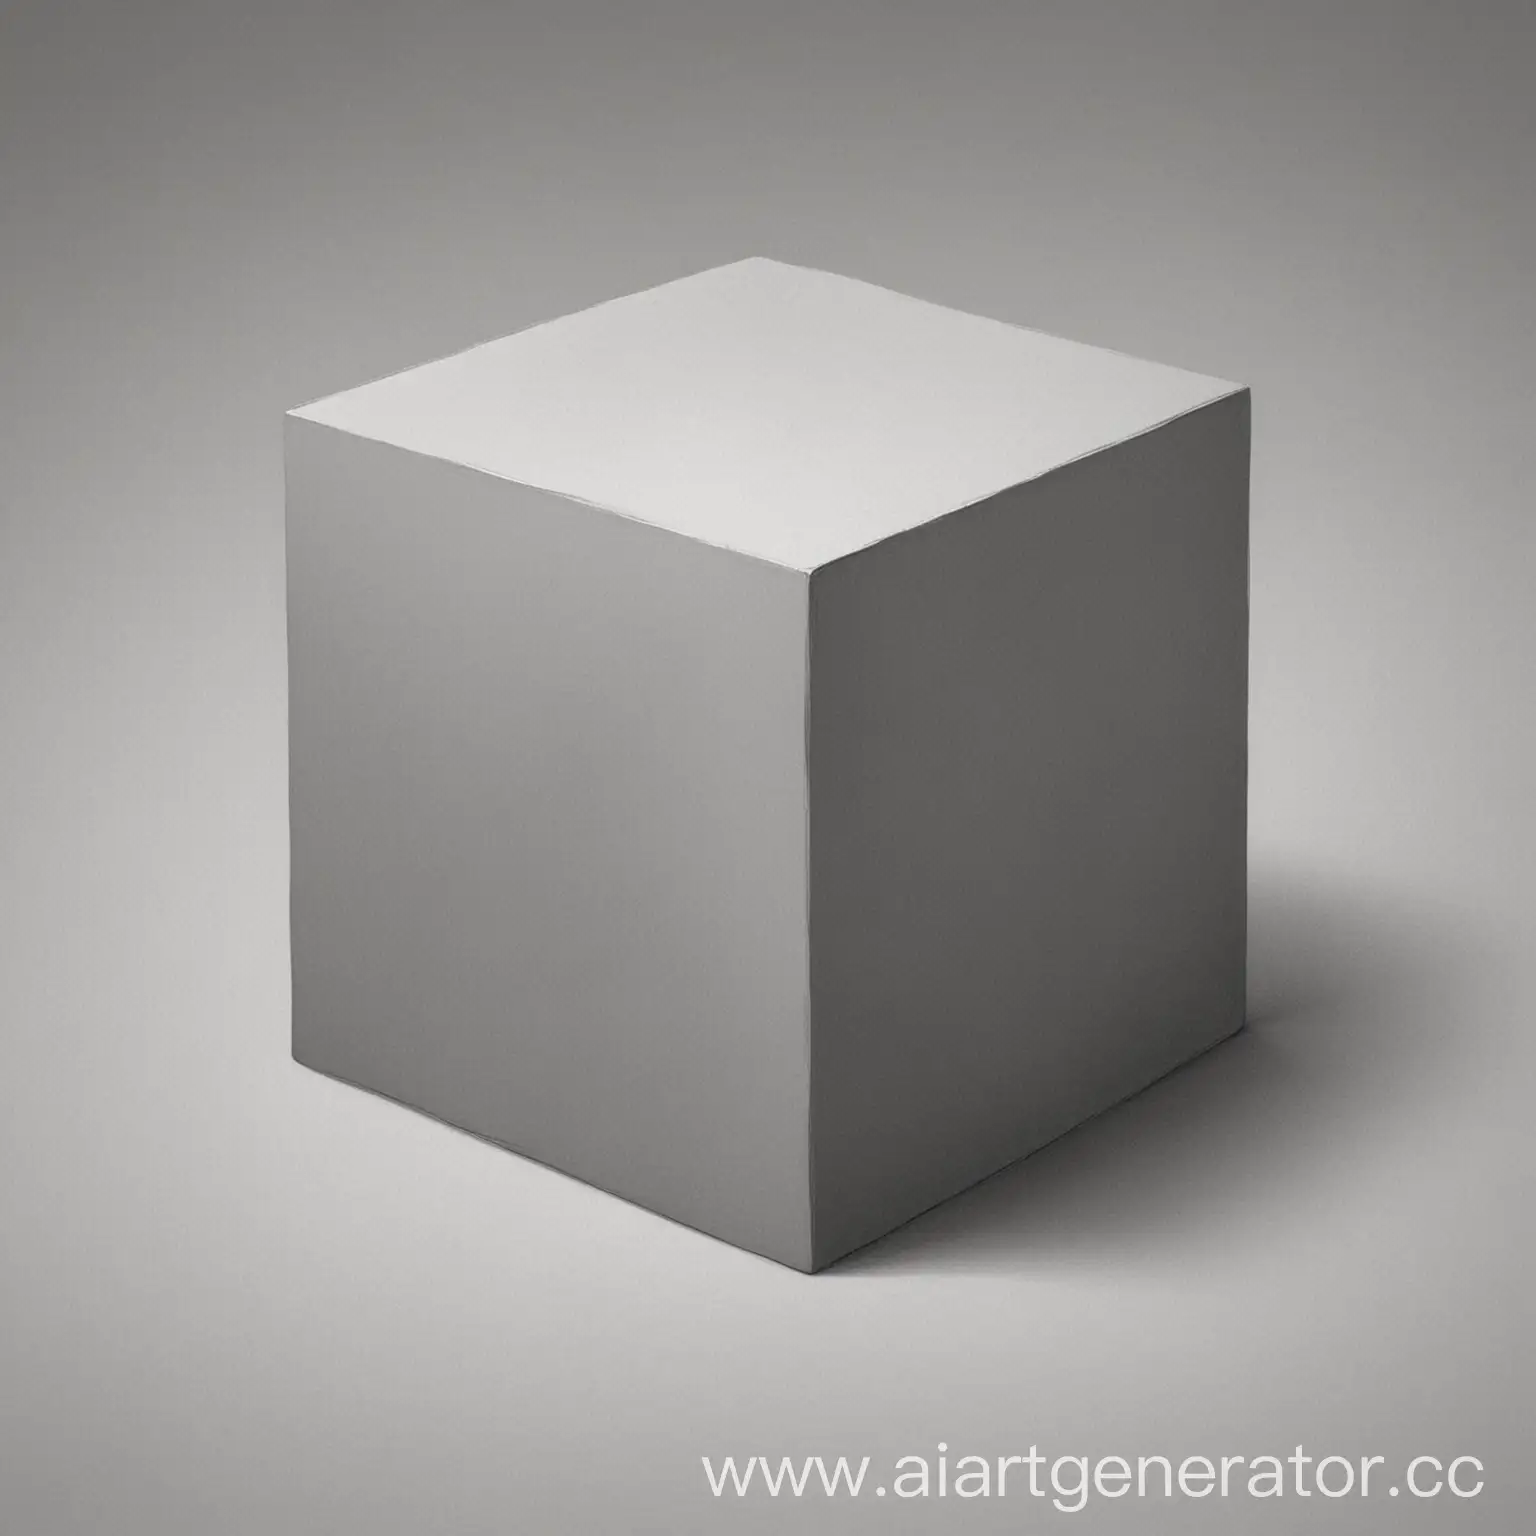 ThreeDimensional-Gray-Cube-Illustration